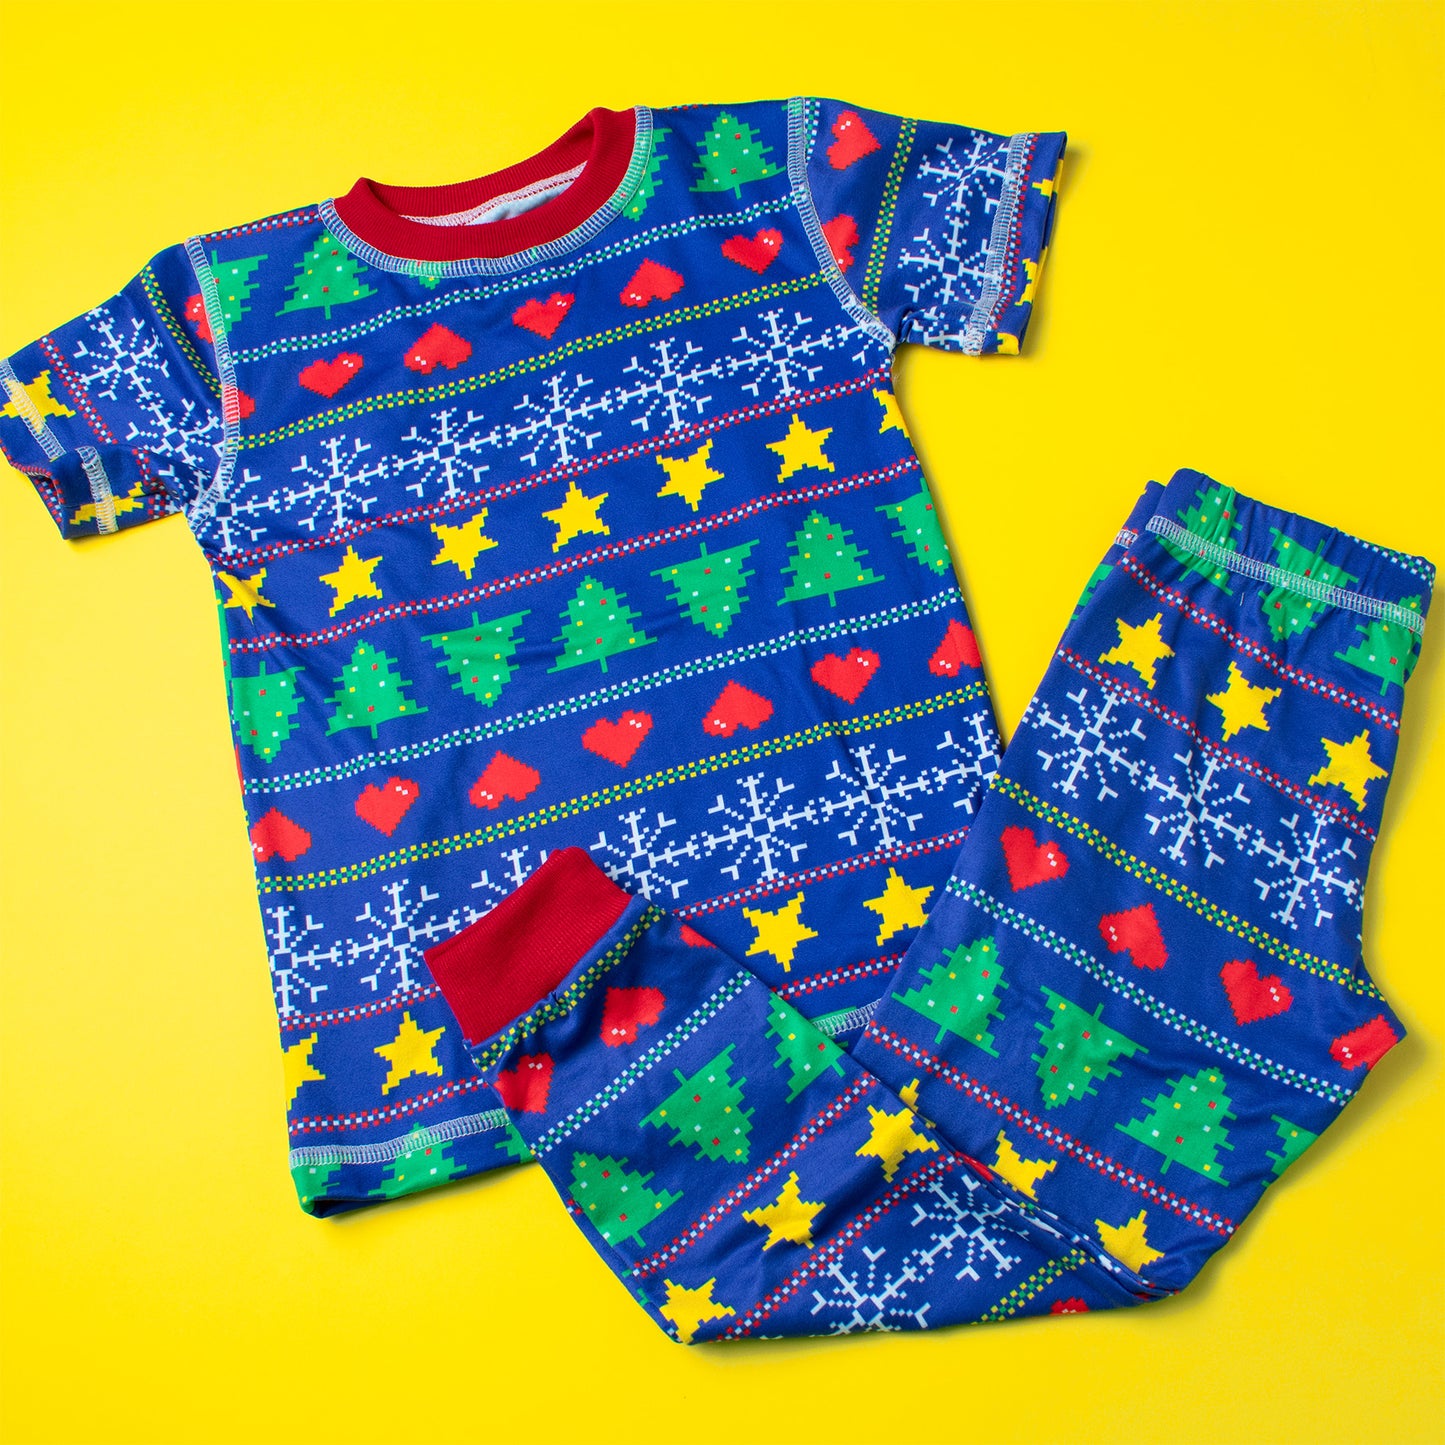 Pijama Navidad Pixelada (Familiar)